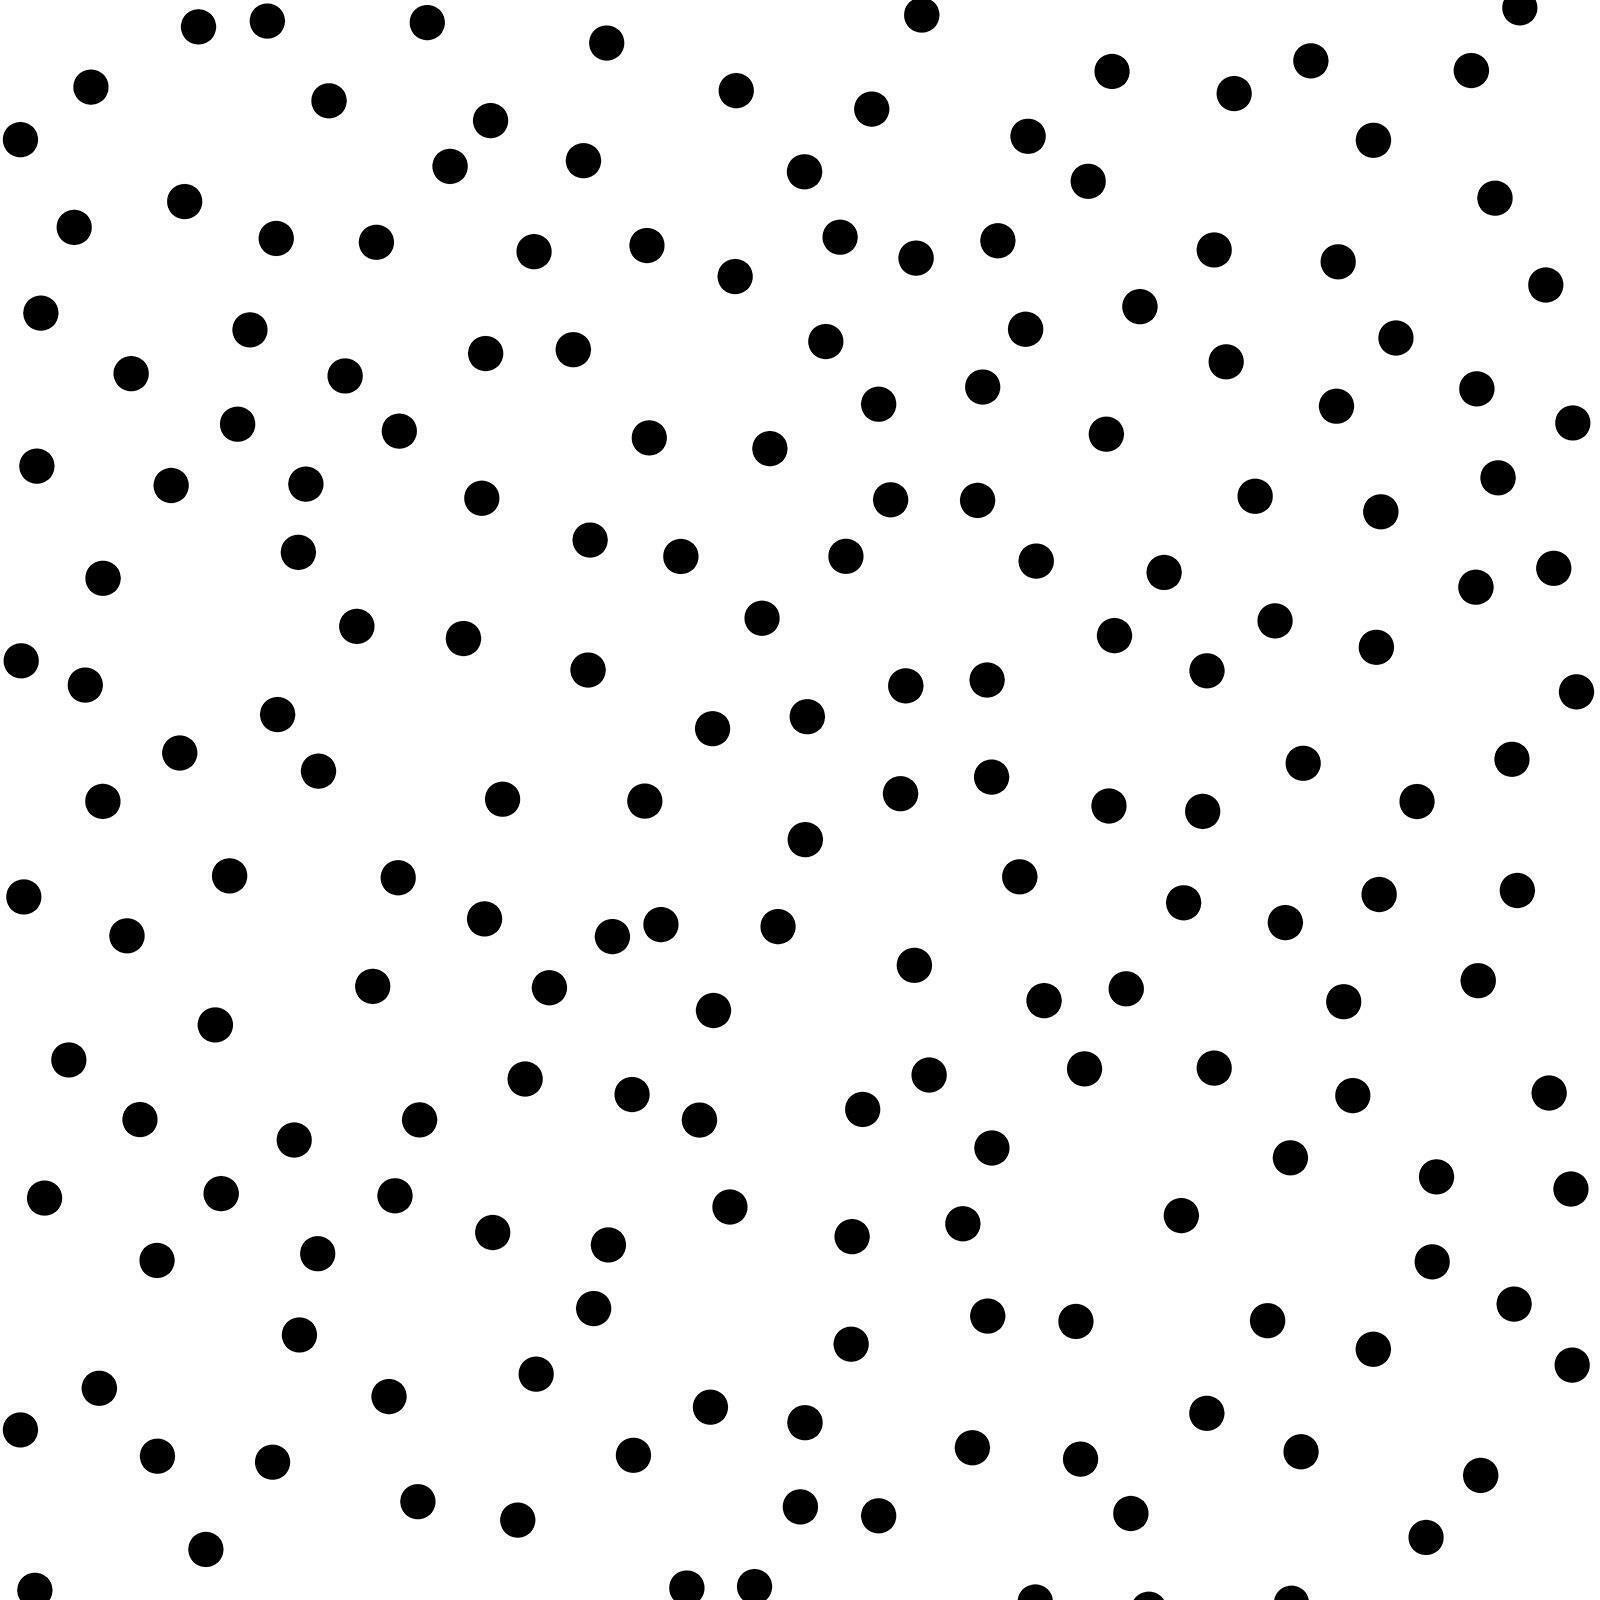 1111692 White Dots Black Background Images Stock Photos  Vectors   Shutterstock